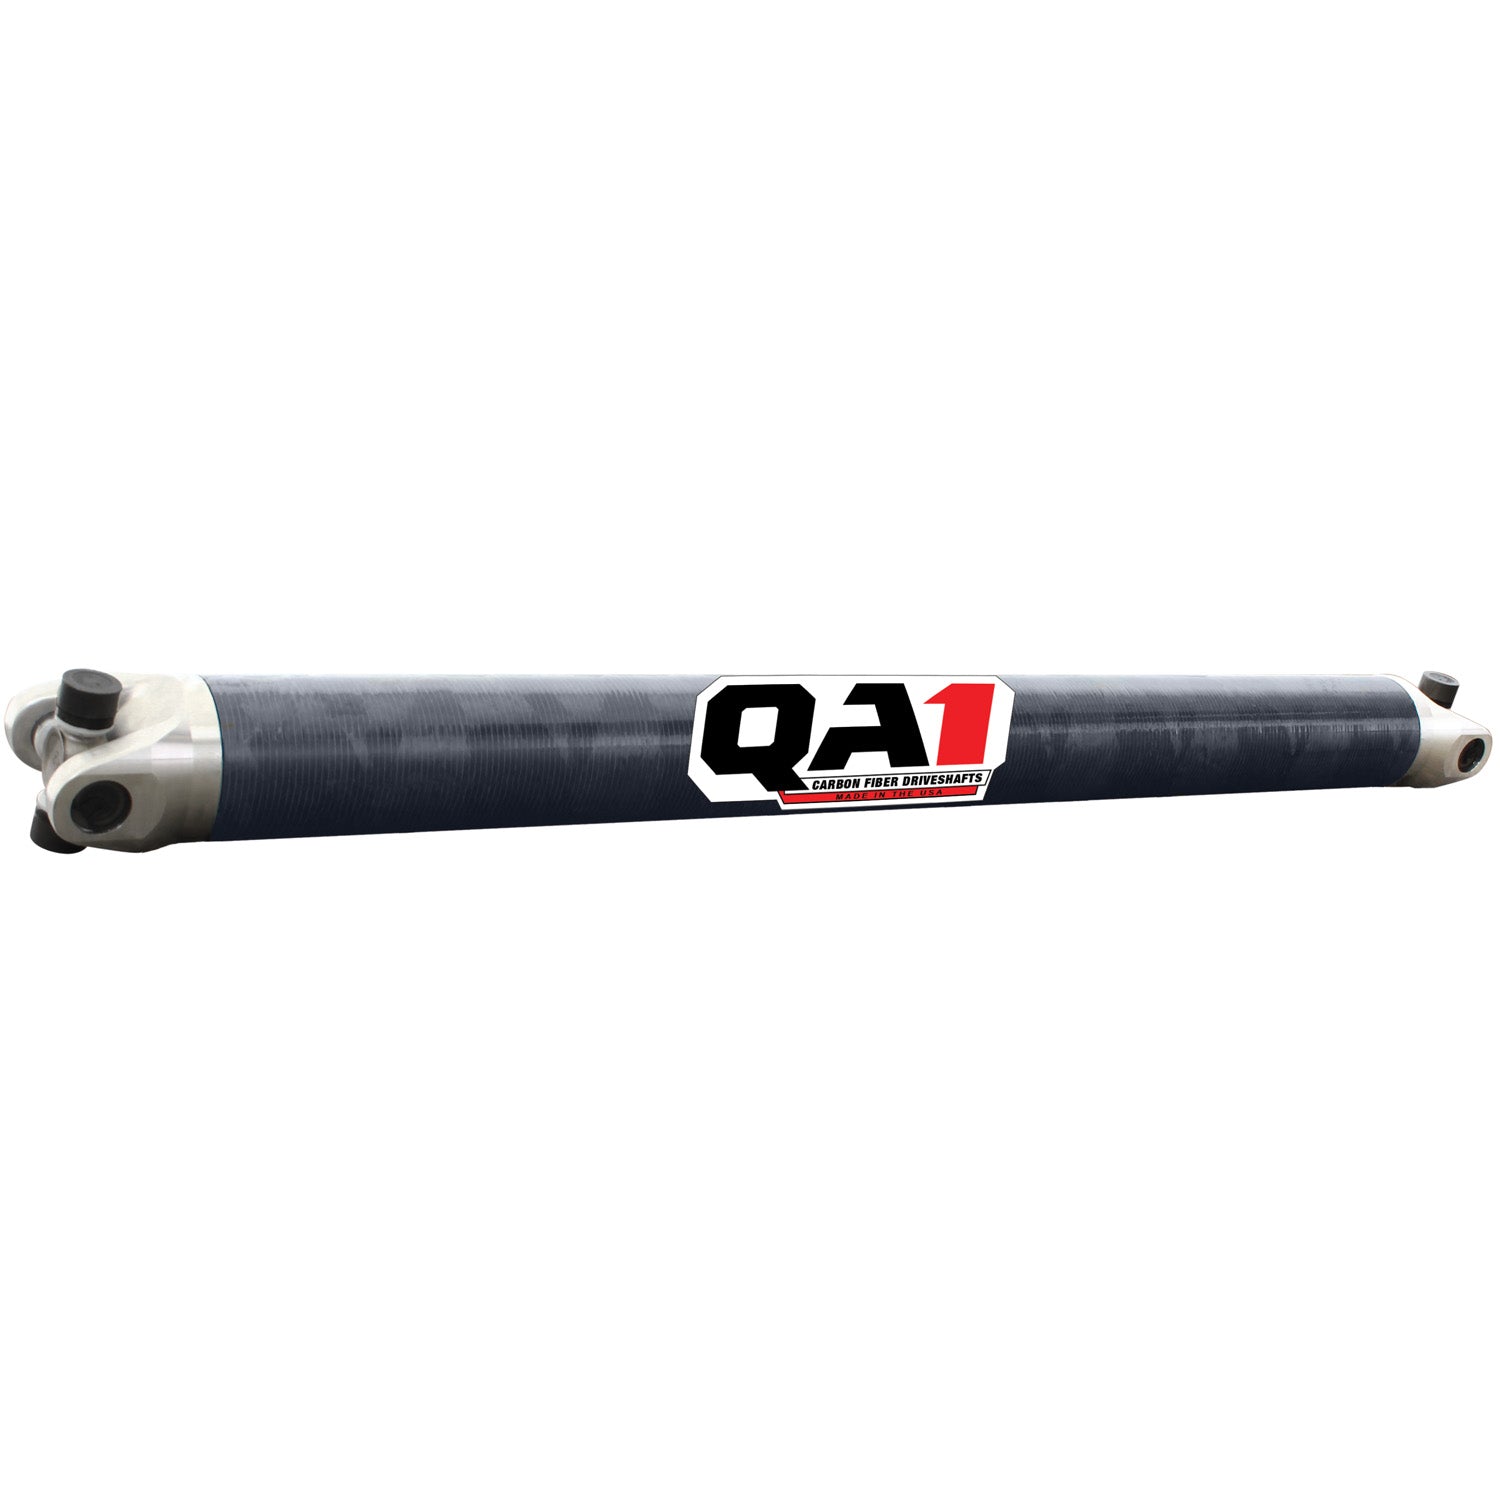 QA1 JJ-11232 Driveshaft, Cf, Ct-Dirt LM, 37.50 XM 3.2, 1310 U-Joint, 2600Lb.